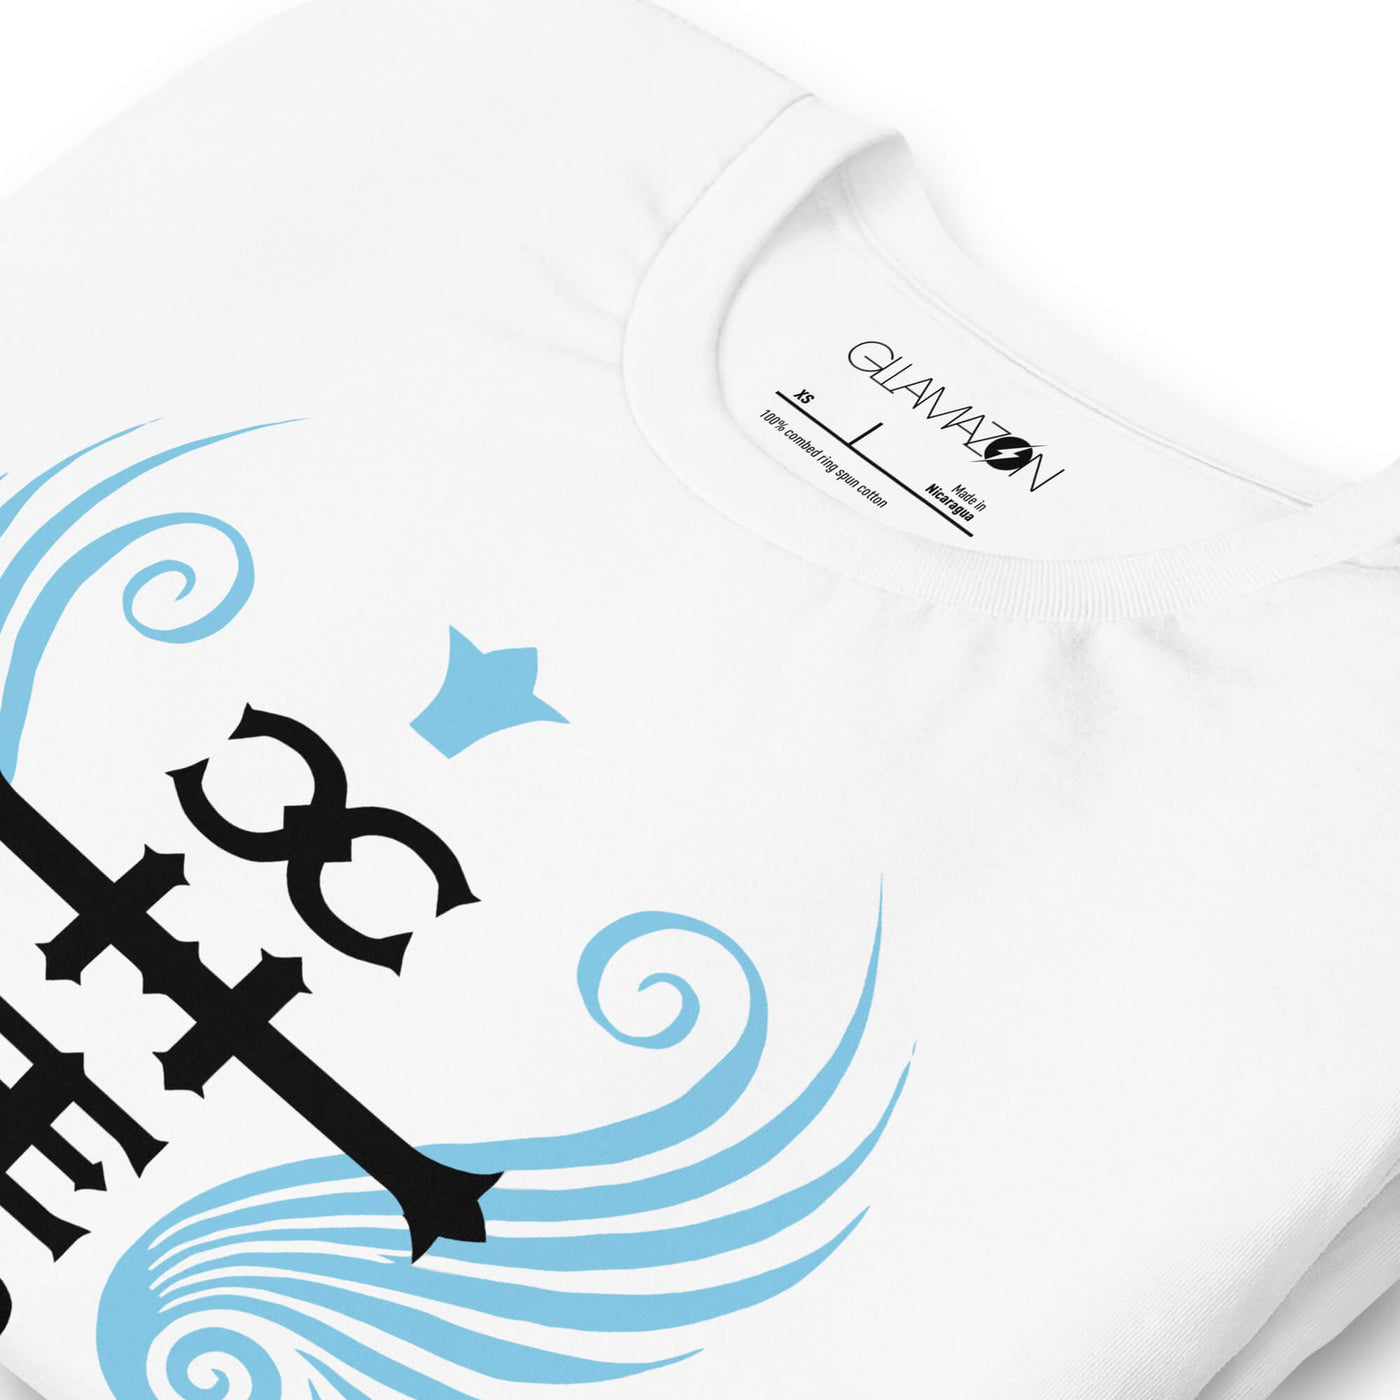 CHER Fan Club T-shirt by Gllamazon. Color: White.